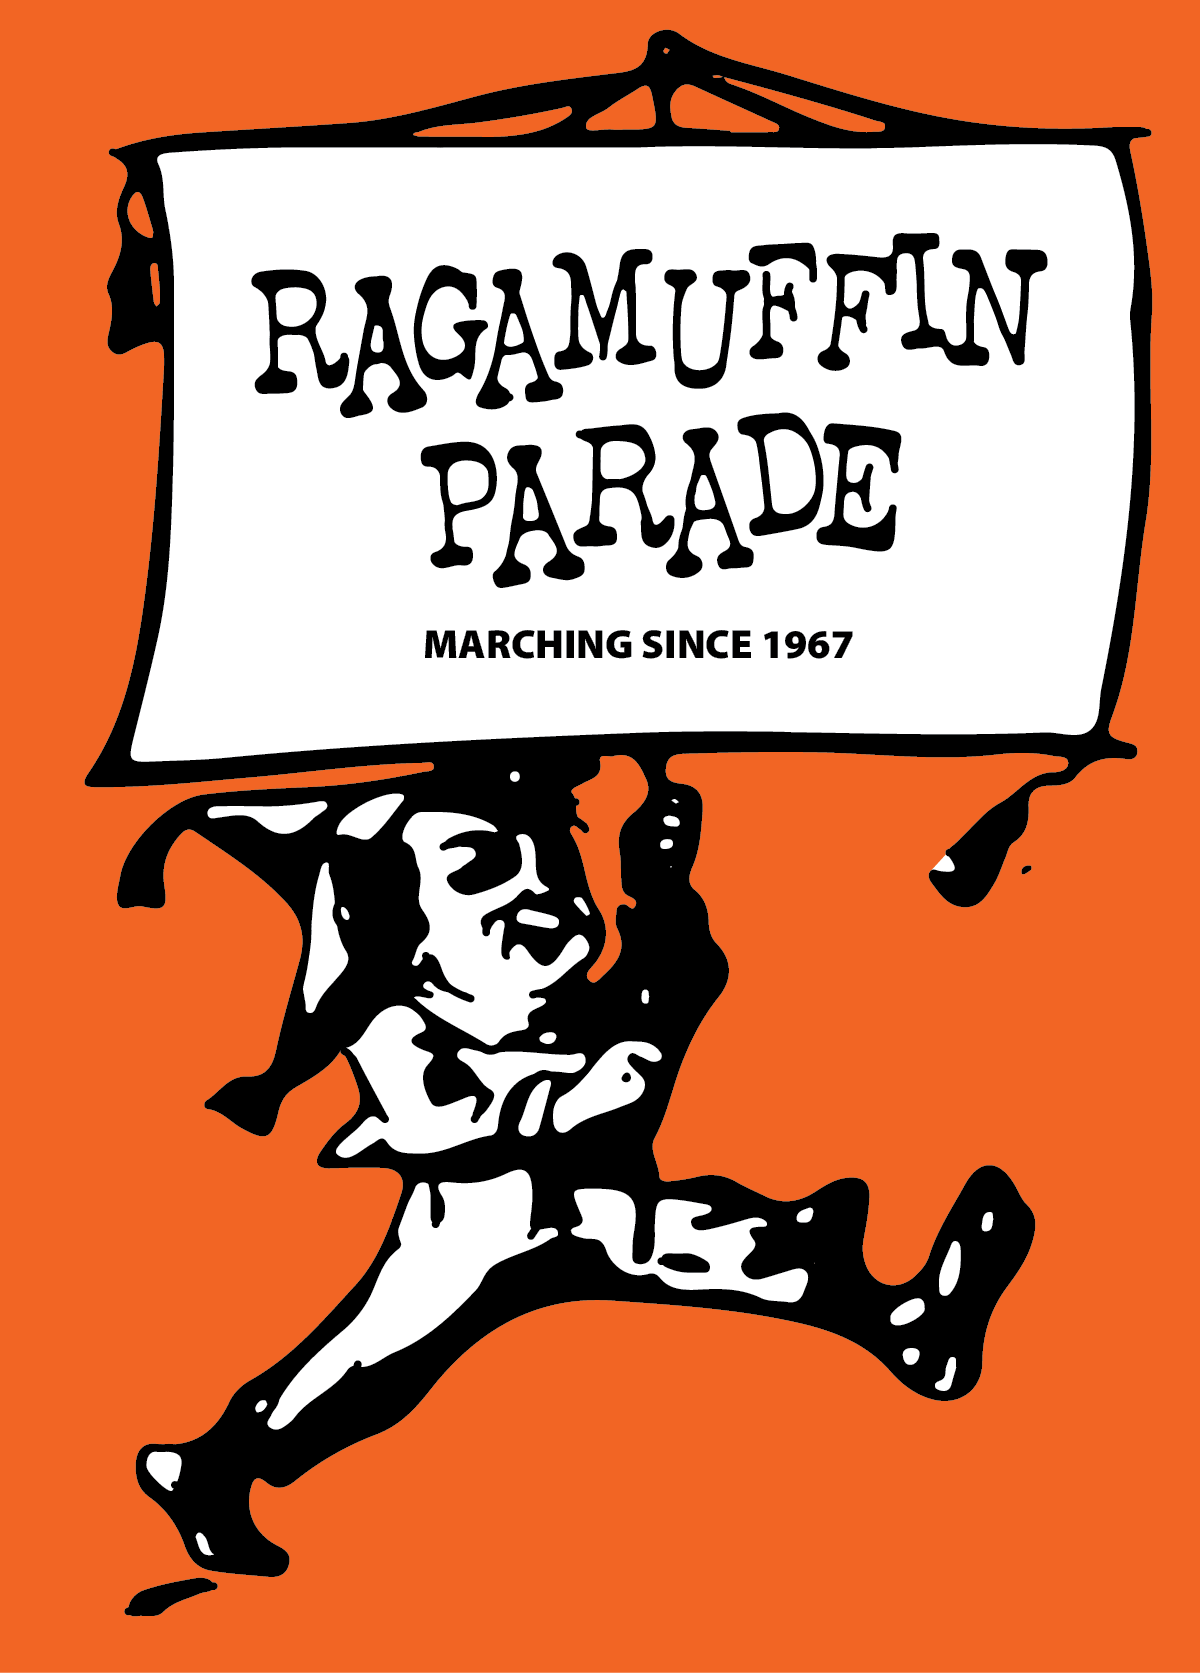 Banner for the Bay Ridge Ragamuffin Parade